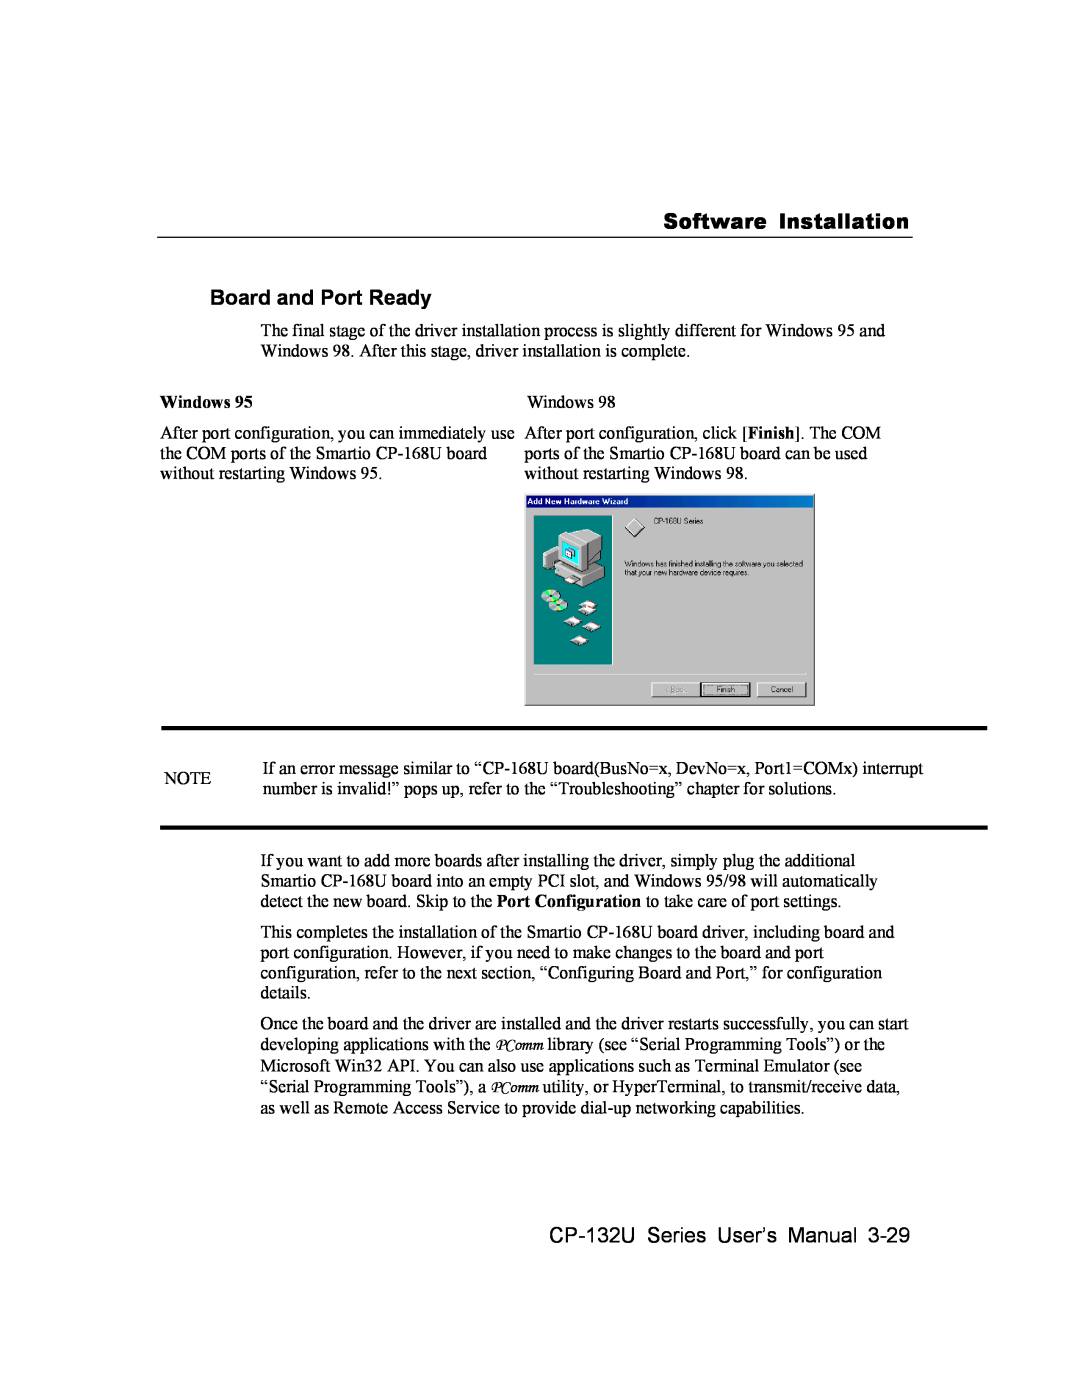 Moxa Technologies user manual Software Installation Board and Port Ready, CP-132U Series User’s Manual, Windows 